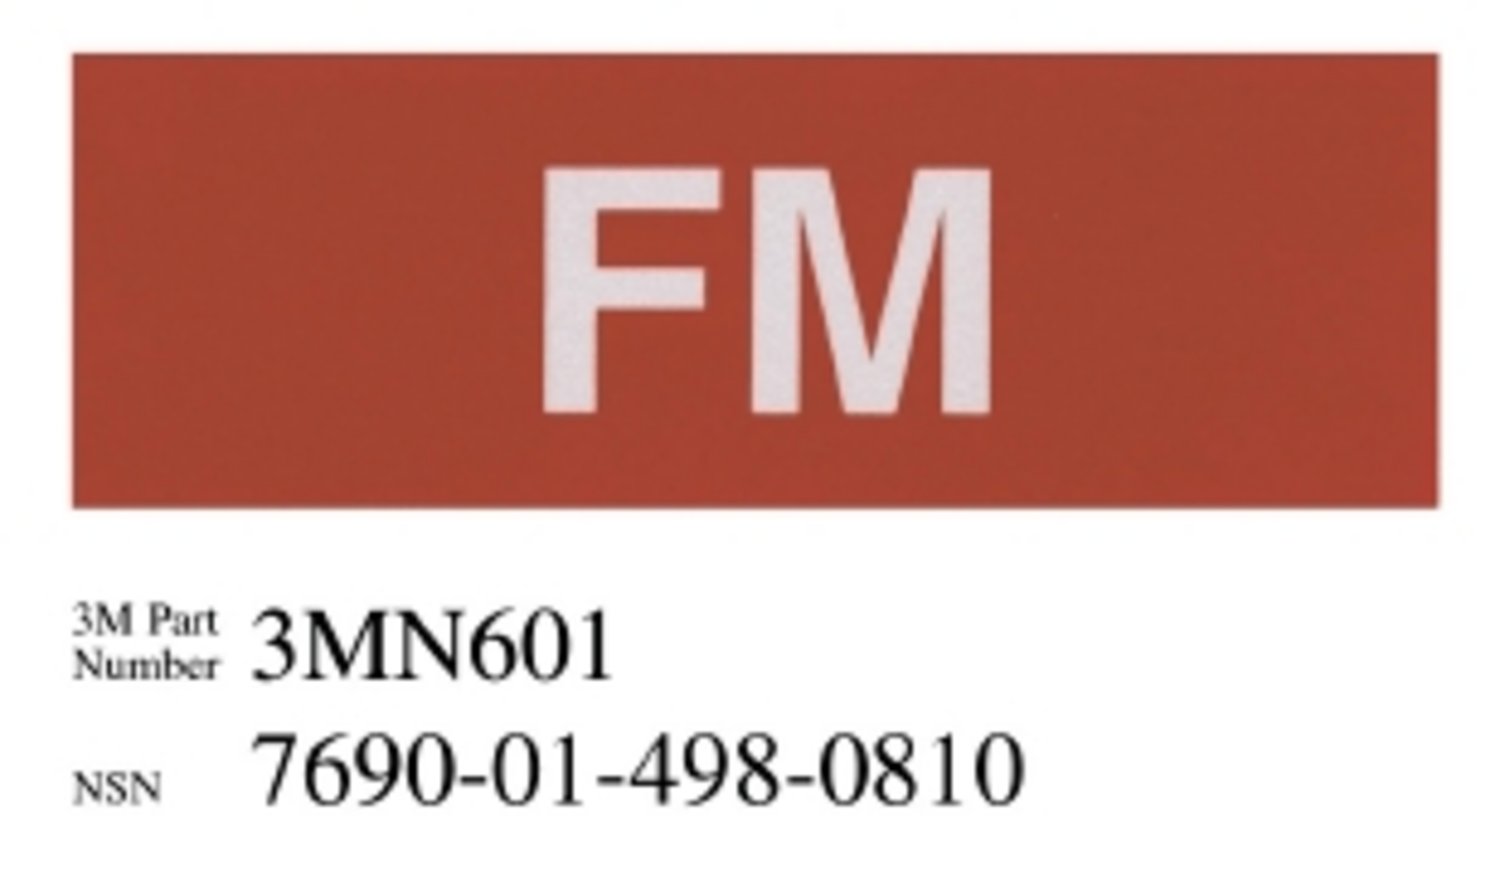 7010316527 - 3M Diamond Grade Damage Control Pipe Marking 3MN601, "FM", 6 in x 2
in, 50/Package